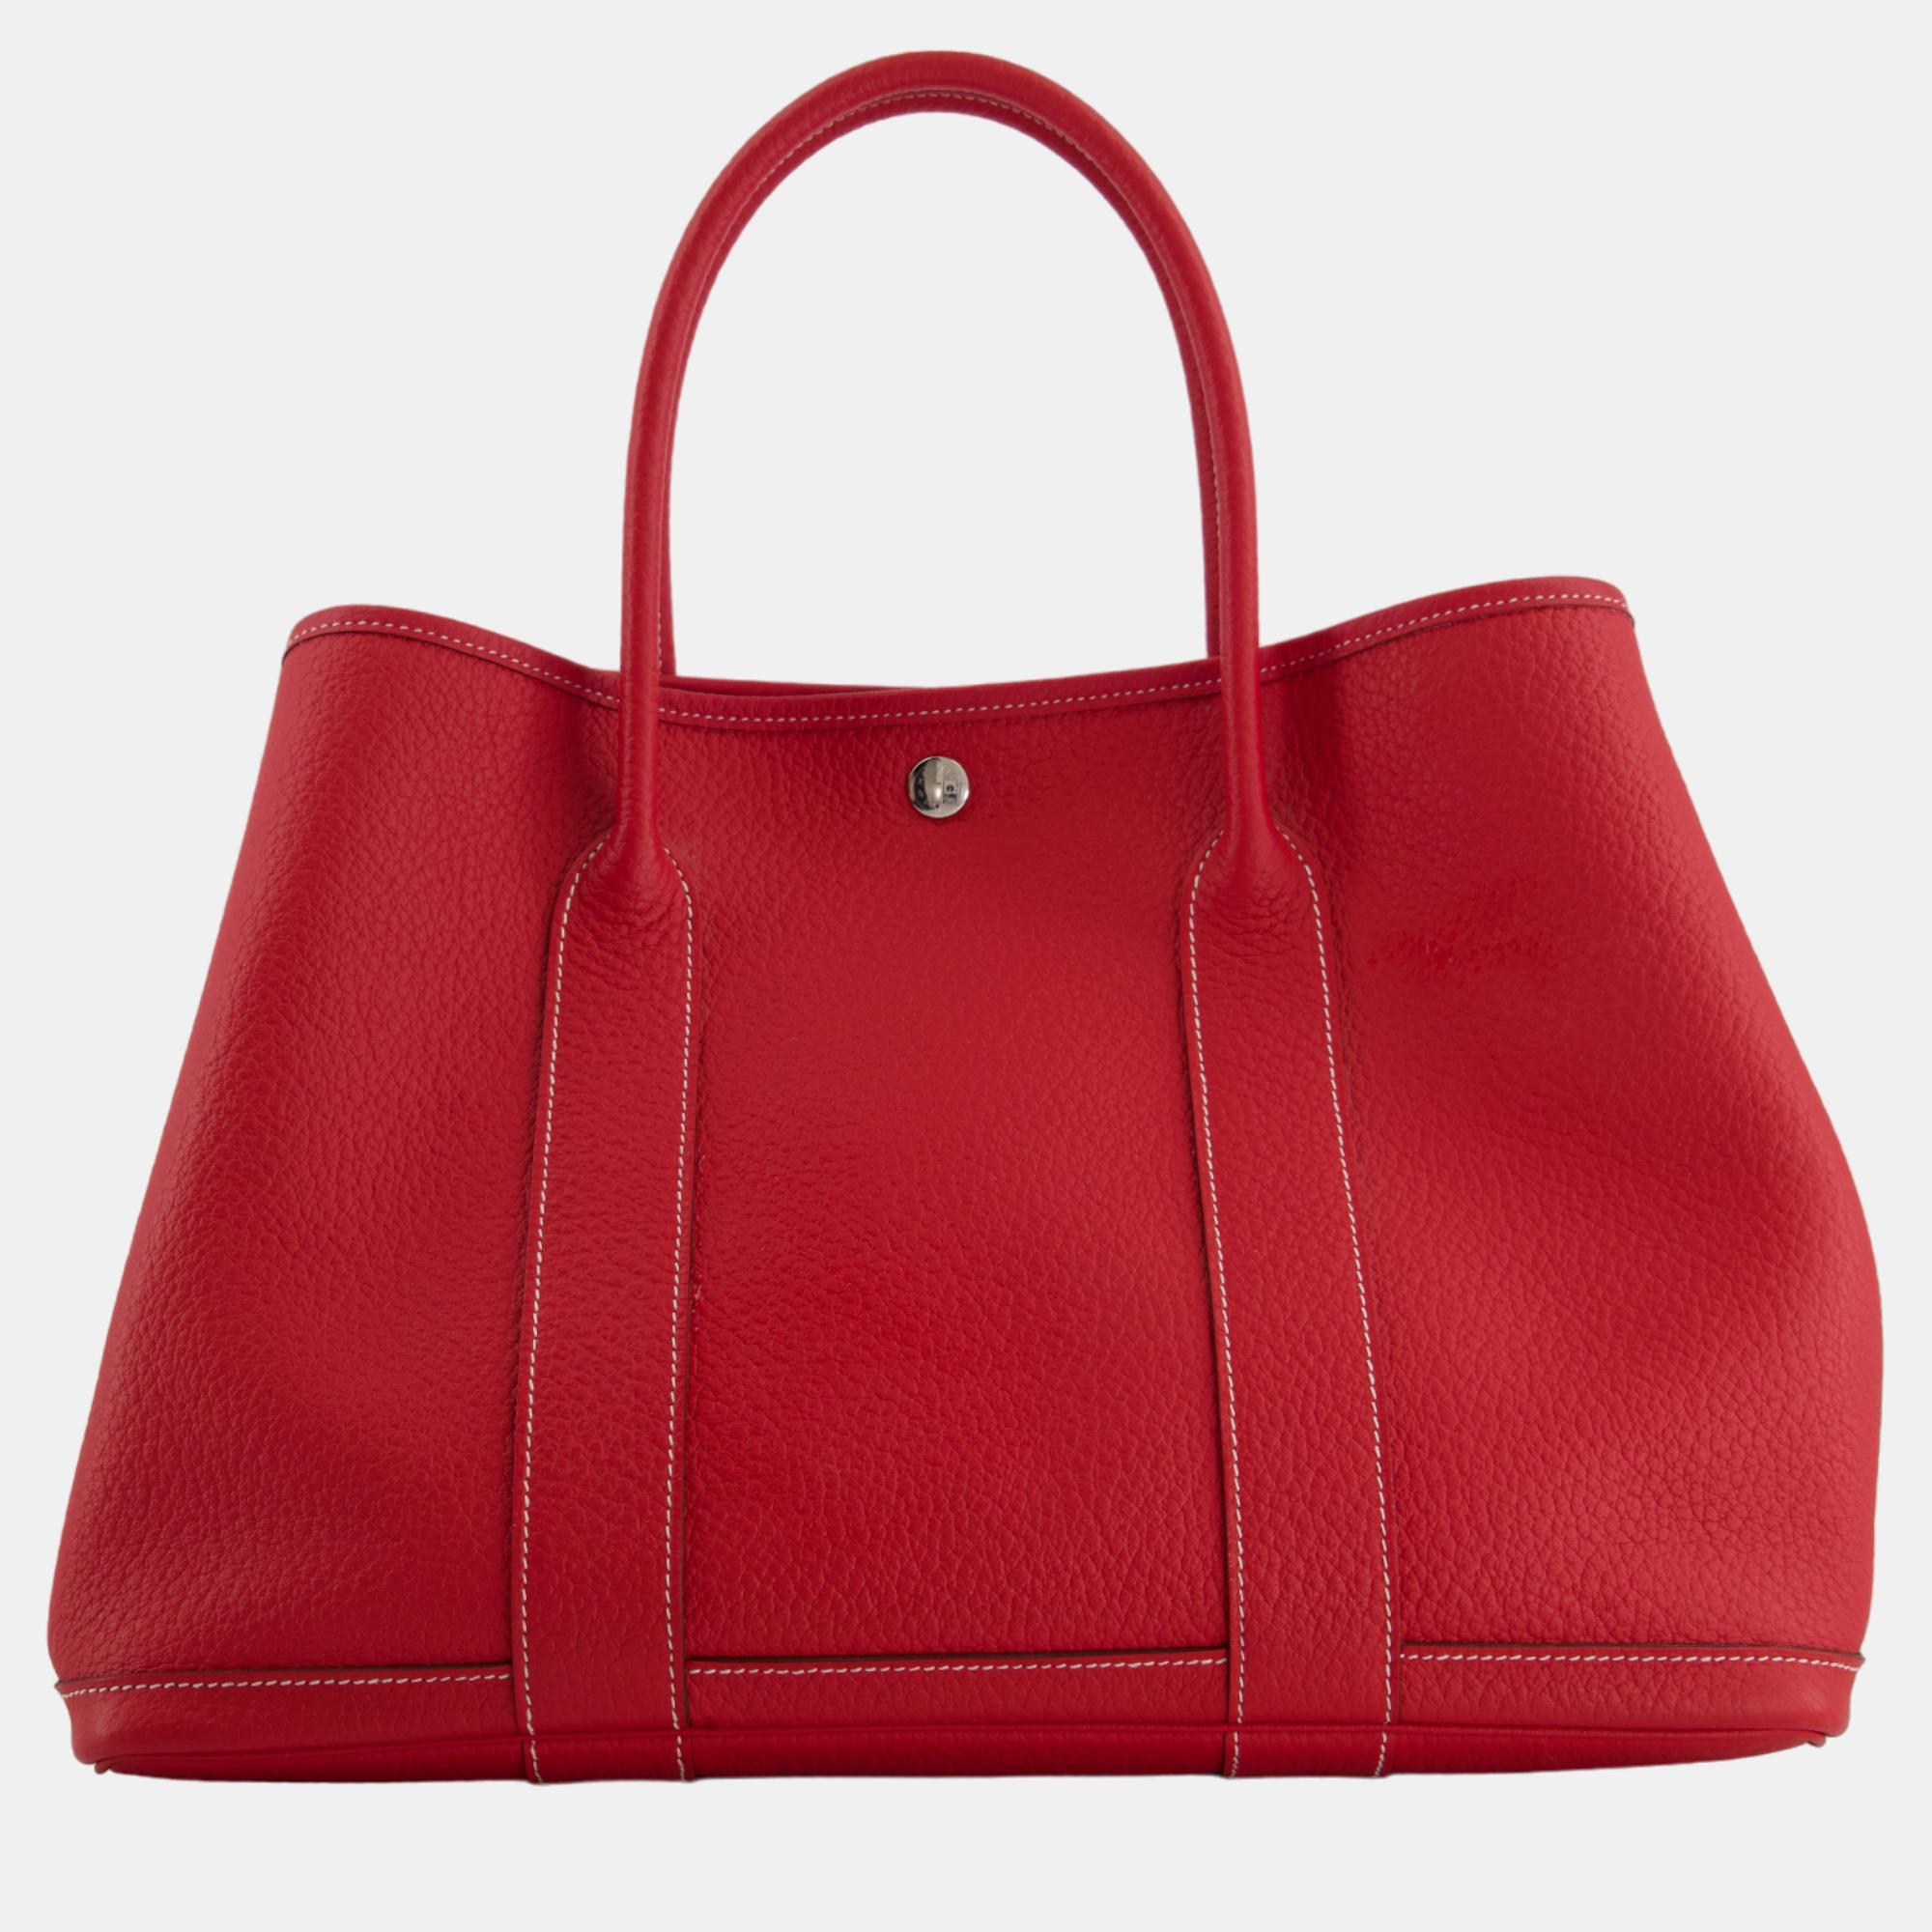 Hermes Garden Party Bag 36cm In Rouge Tomato Negonda Leather With Palladium Hardware